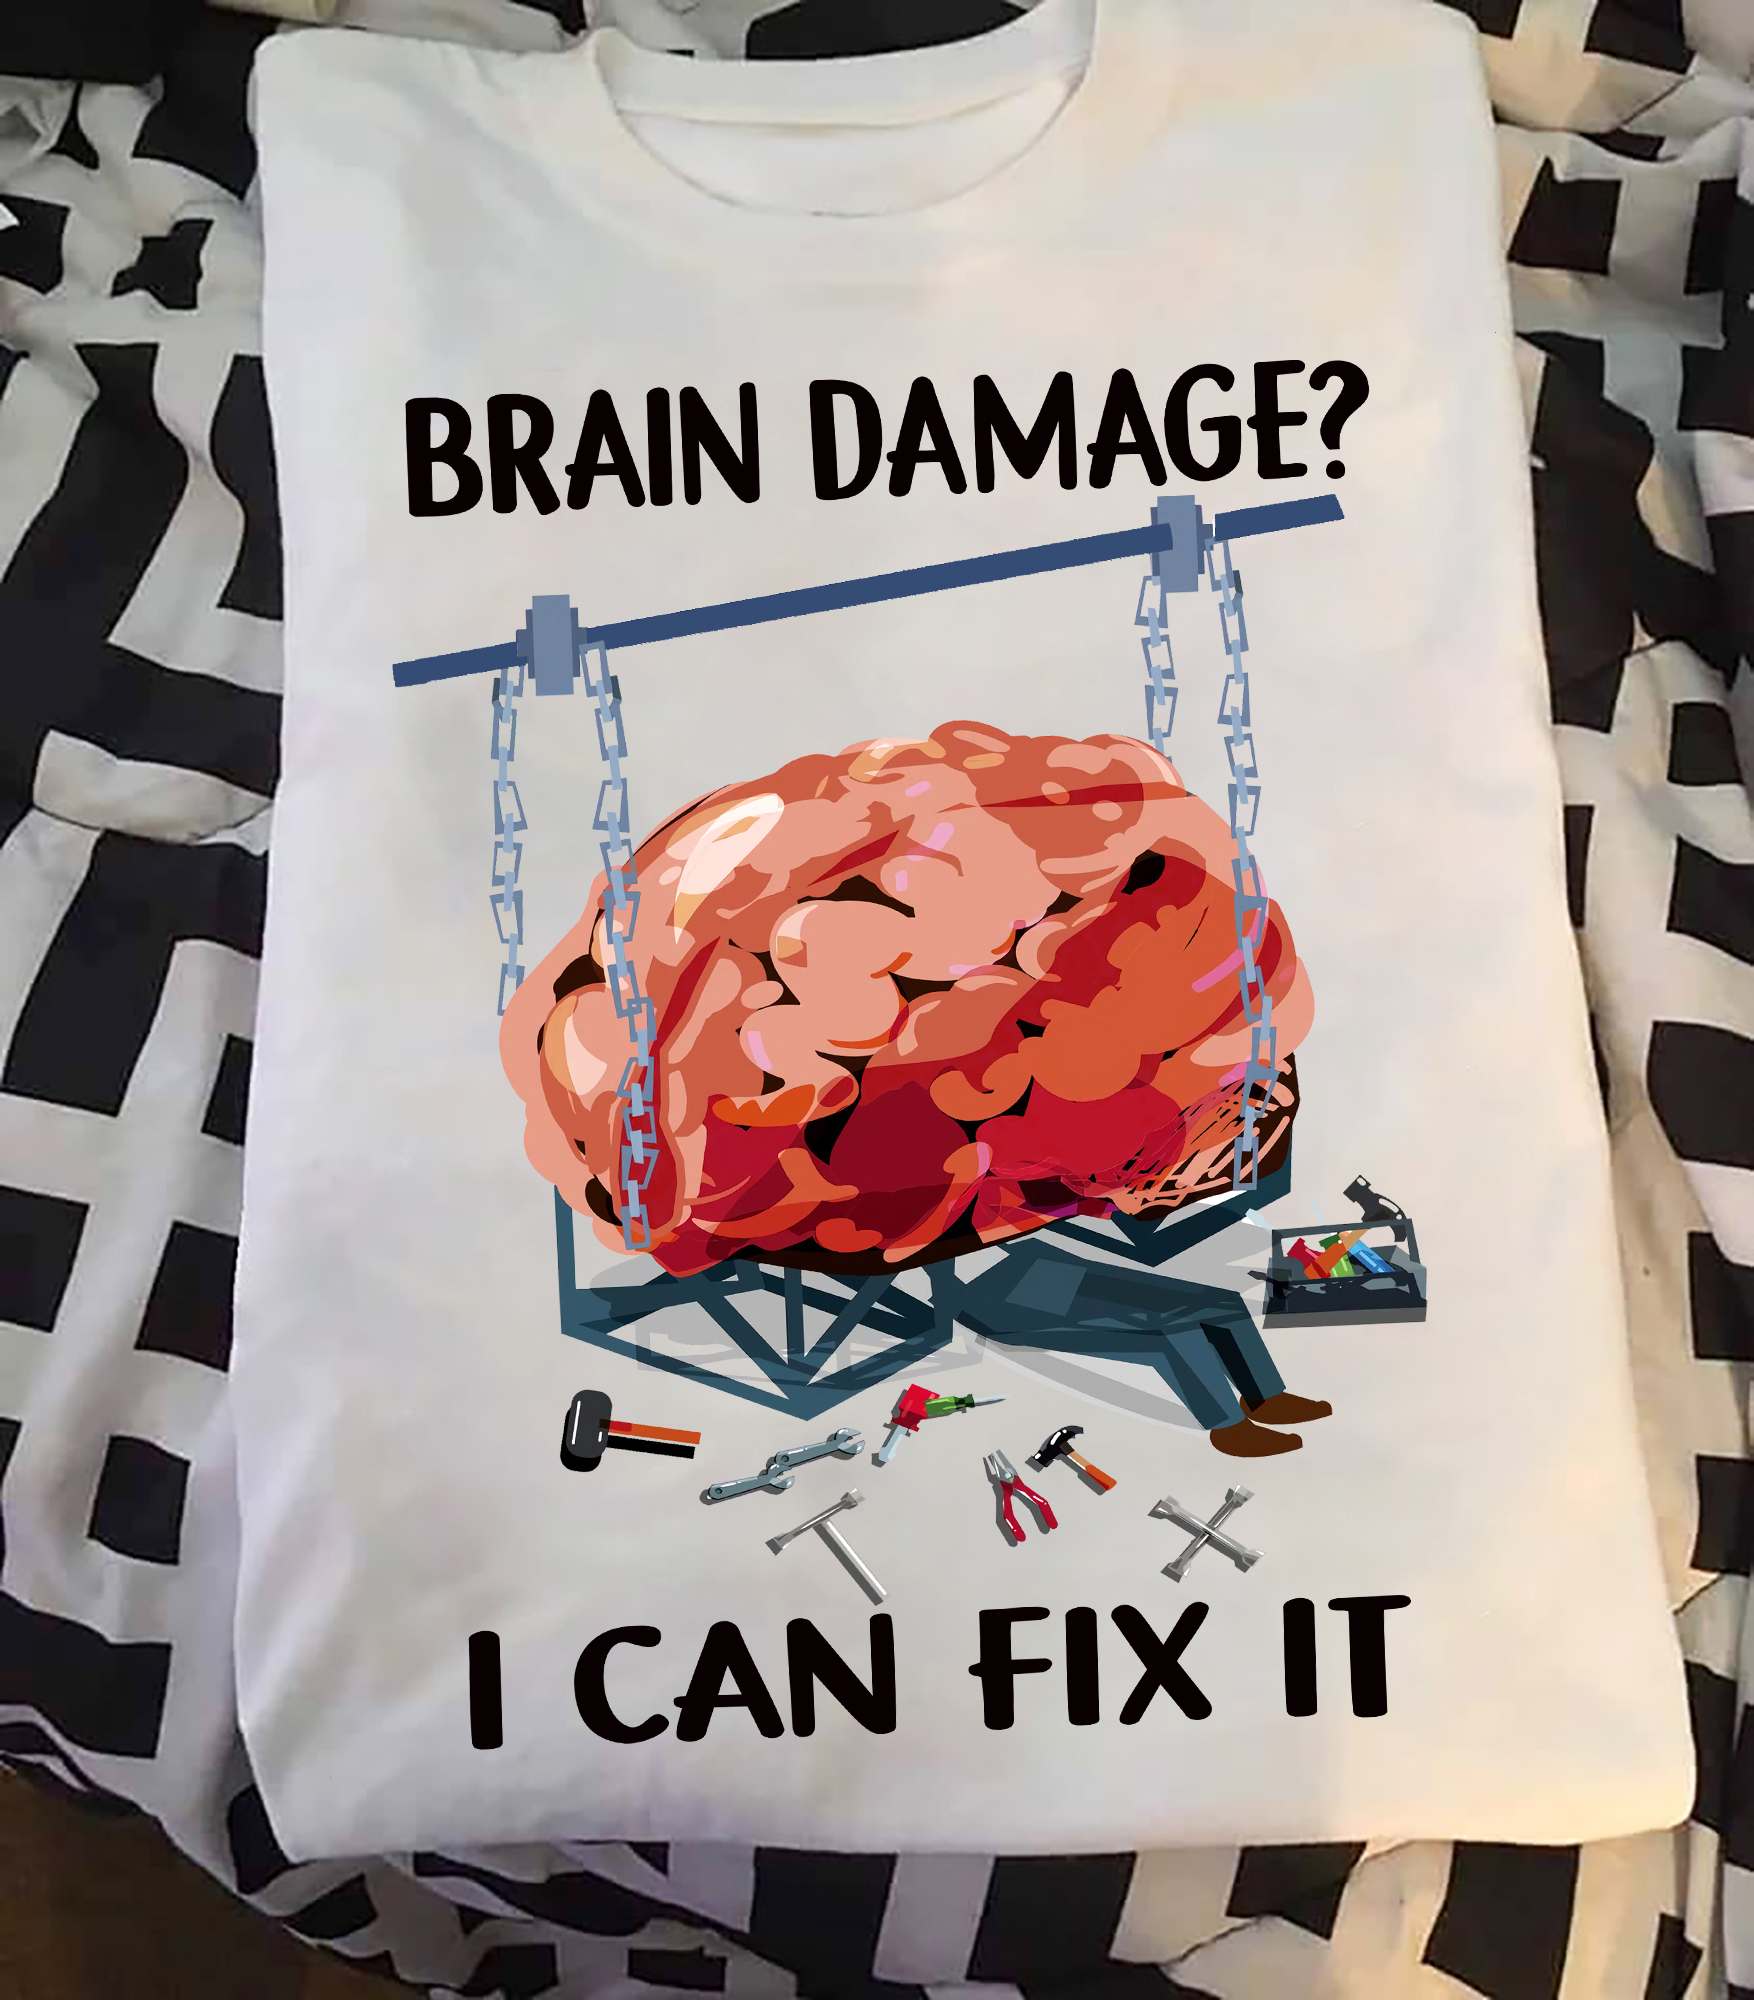 Brain damage I can fix it - Brain surgery